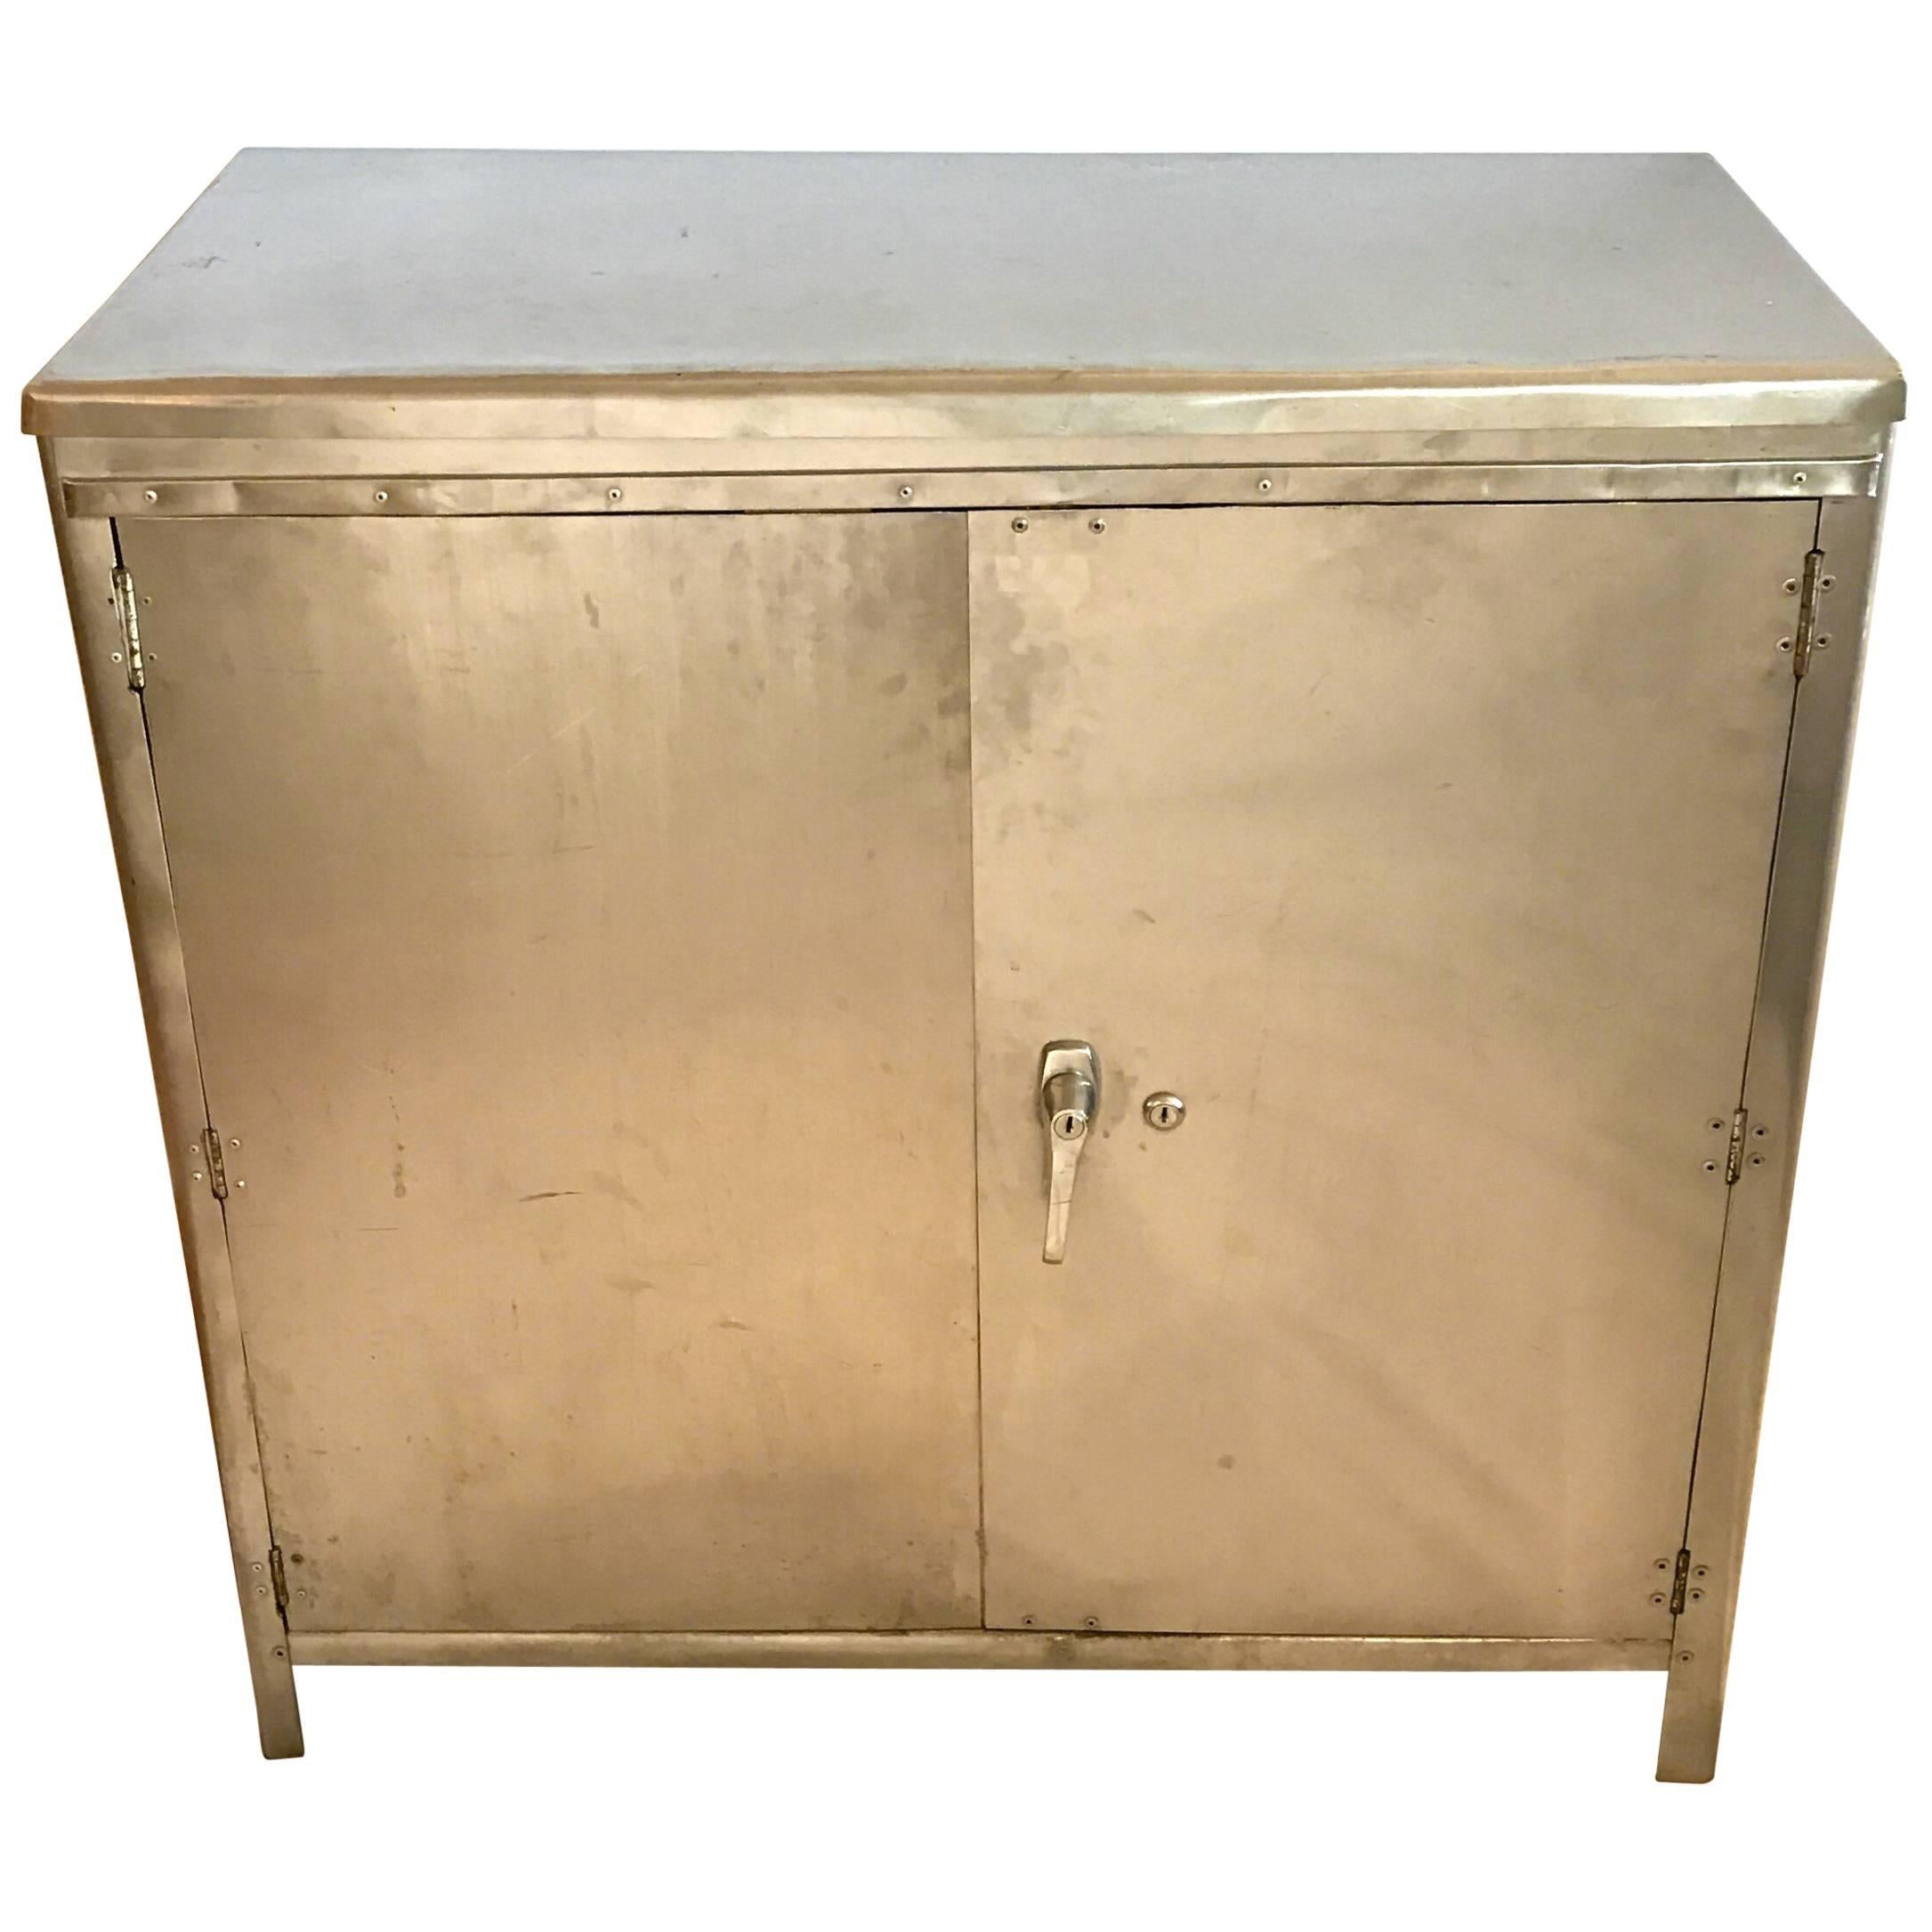 Midcentury Industrial Metal Steel Bar Cabinet Credenza